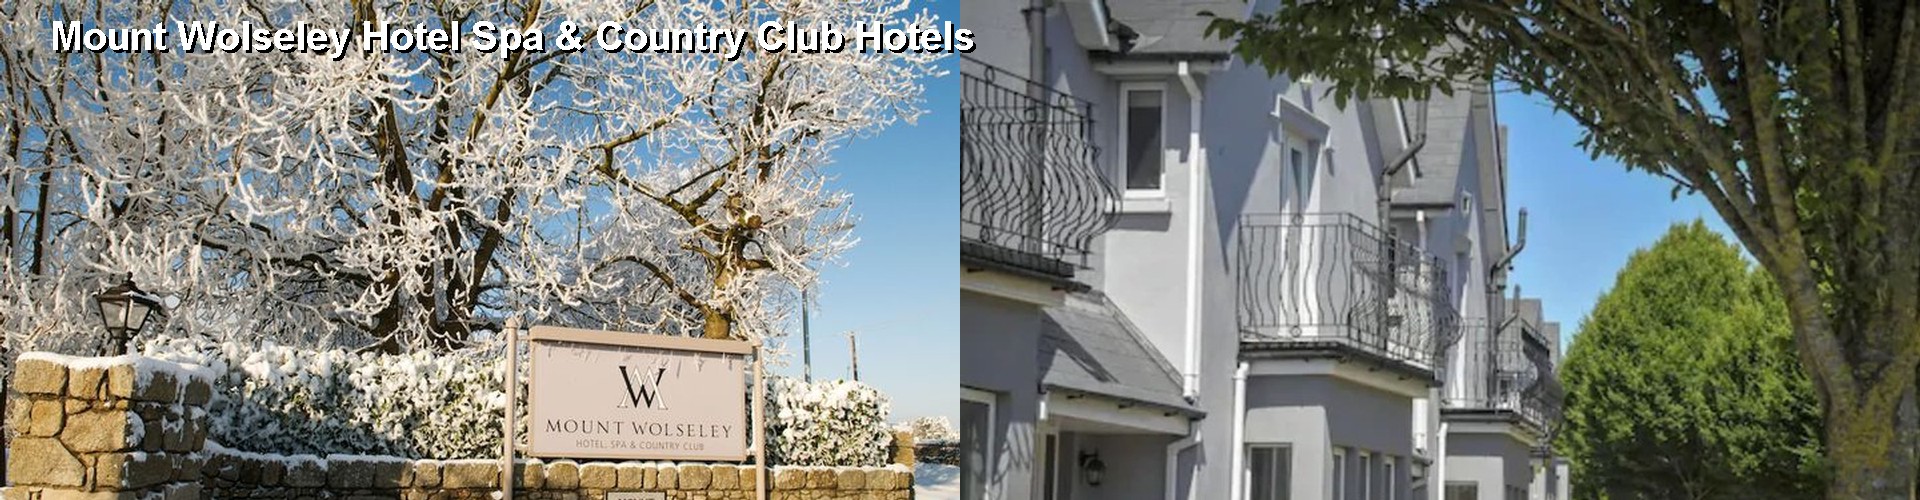 5 Best Hotels near Mount Wolseley Hotel Spa & Country Club